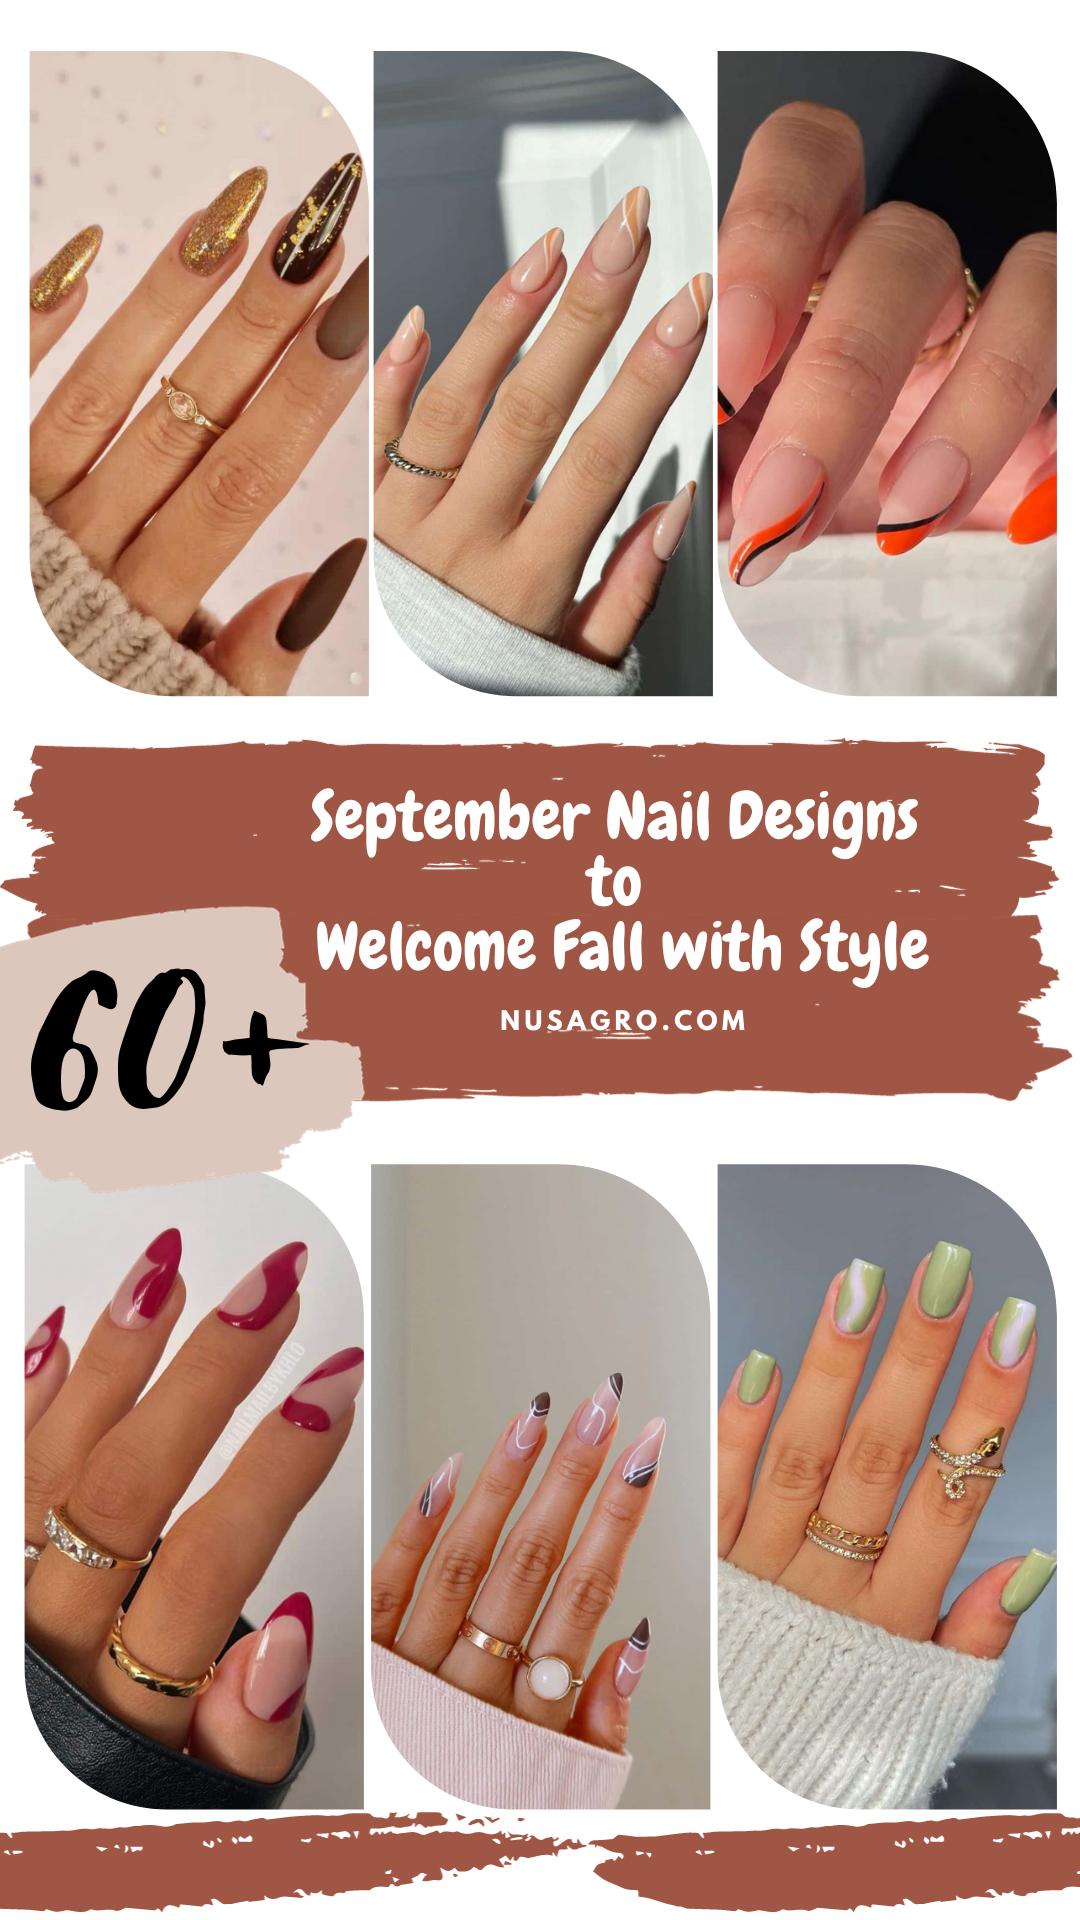 September Nail Designs